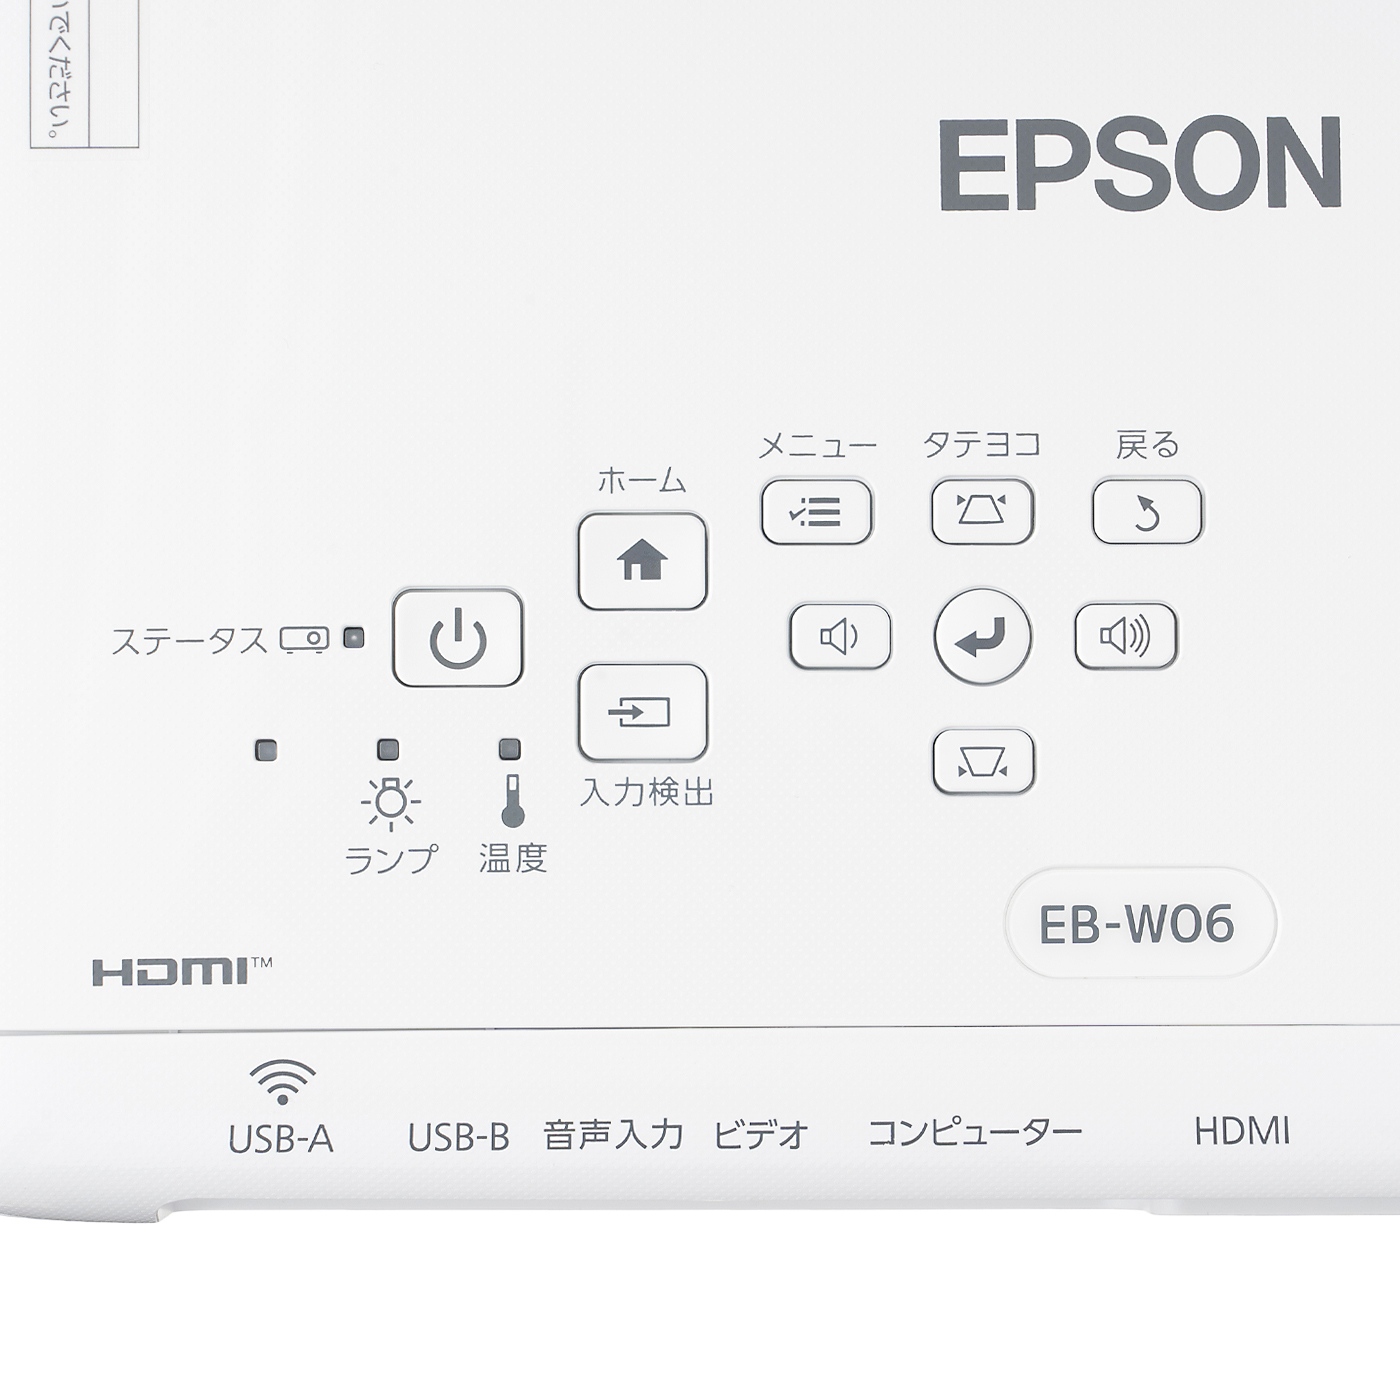 EPSON EB-W06をレビュー！口コミ・評判をもとに徹底検証 mybest